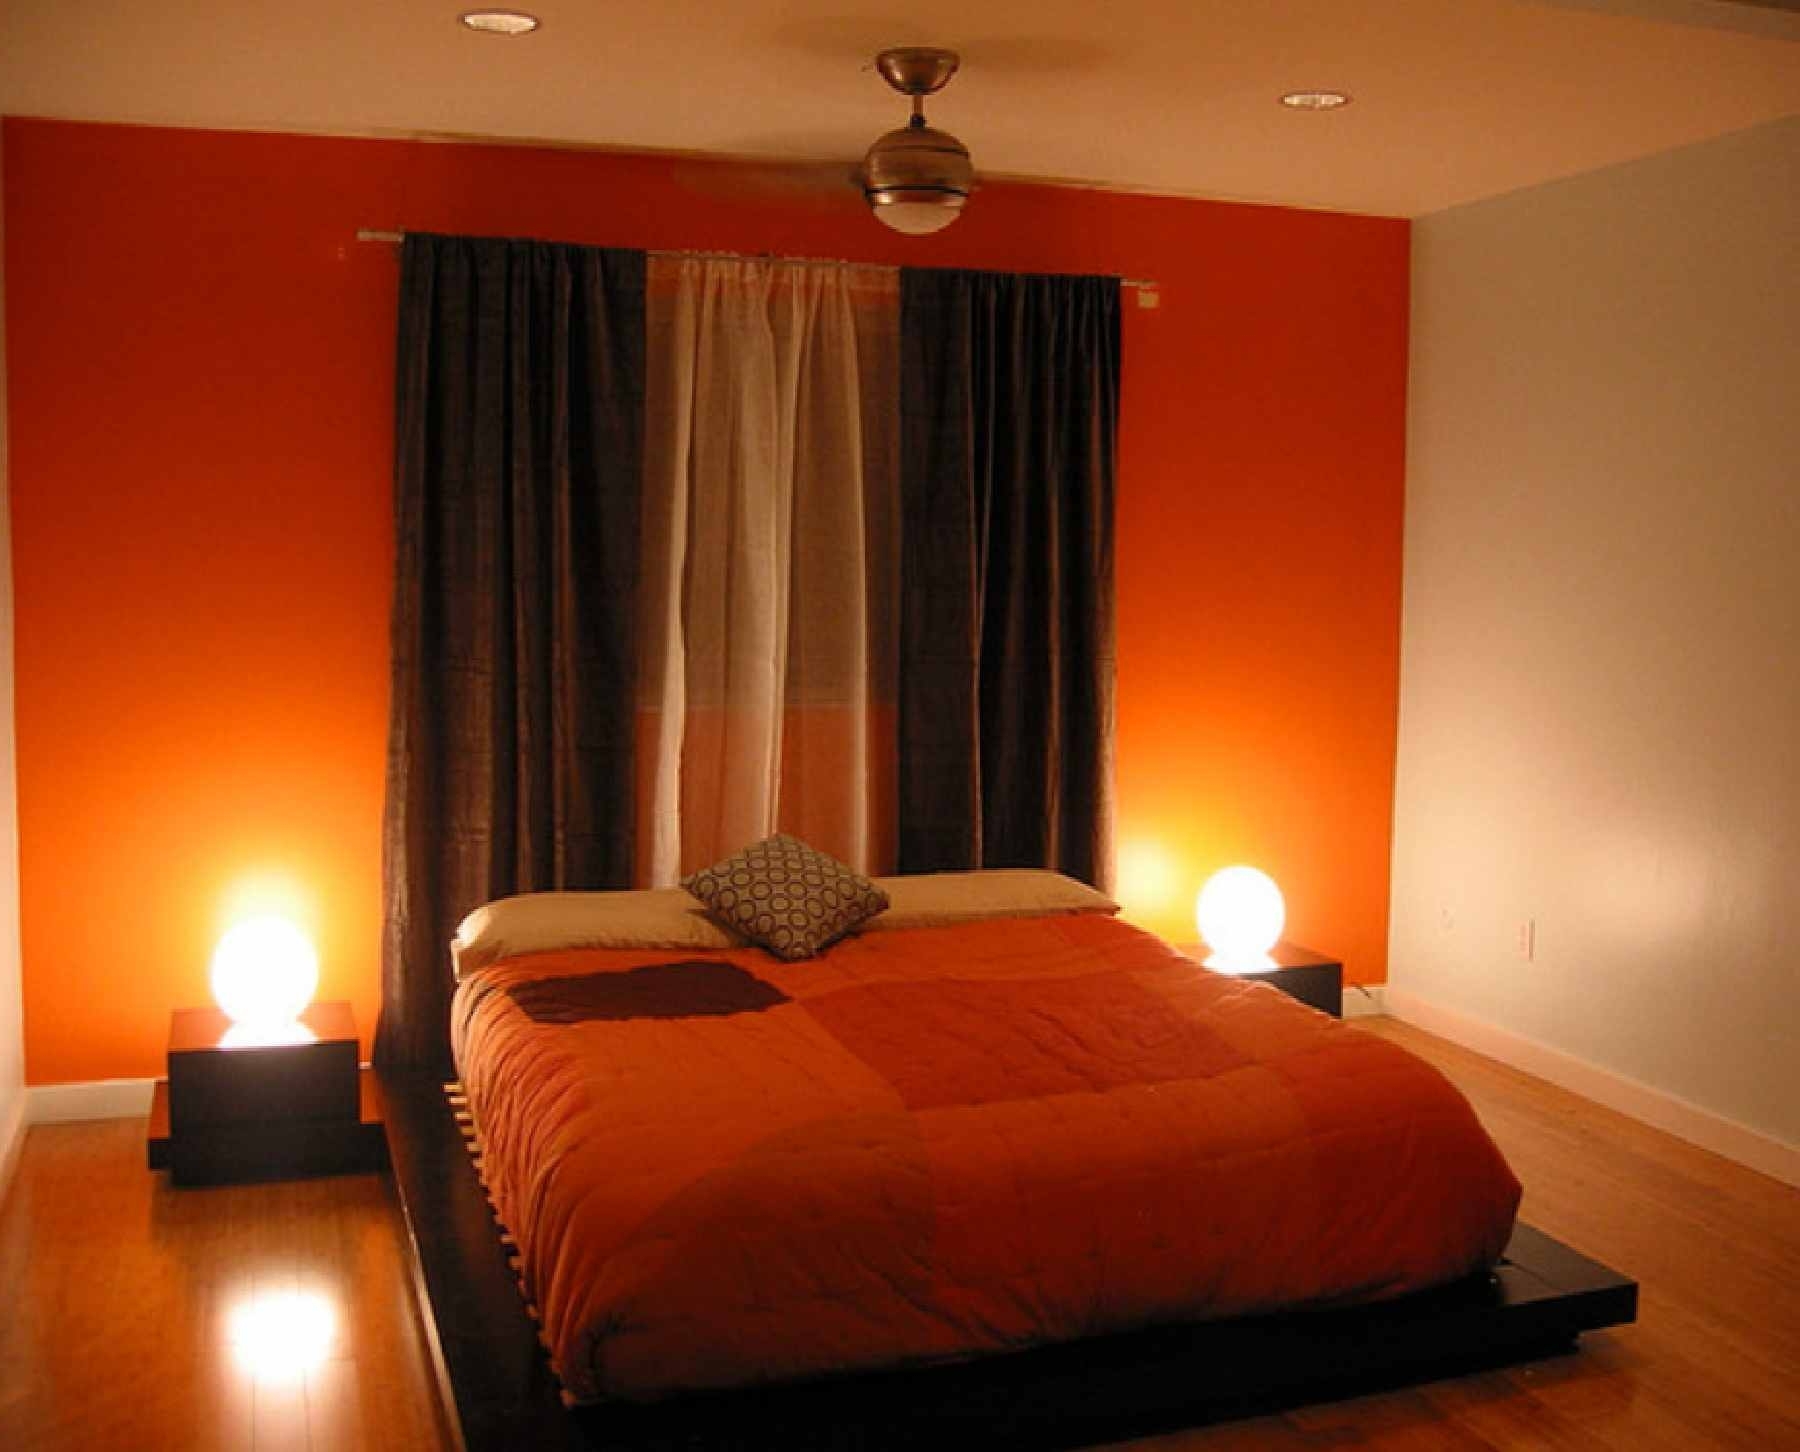 Оранжевая спальня